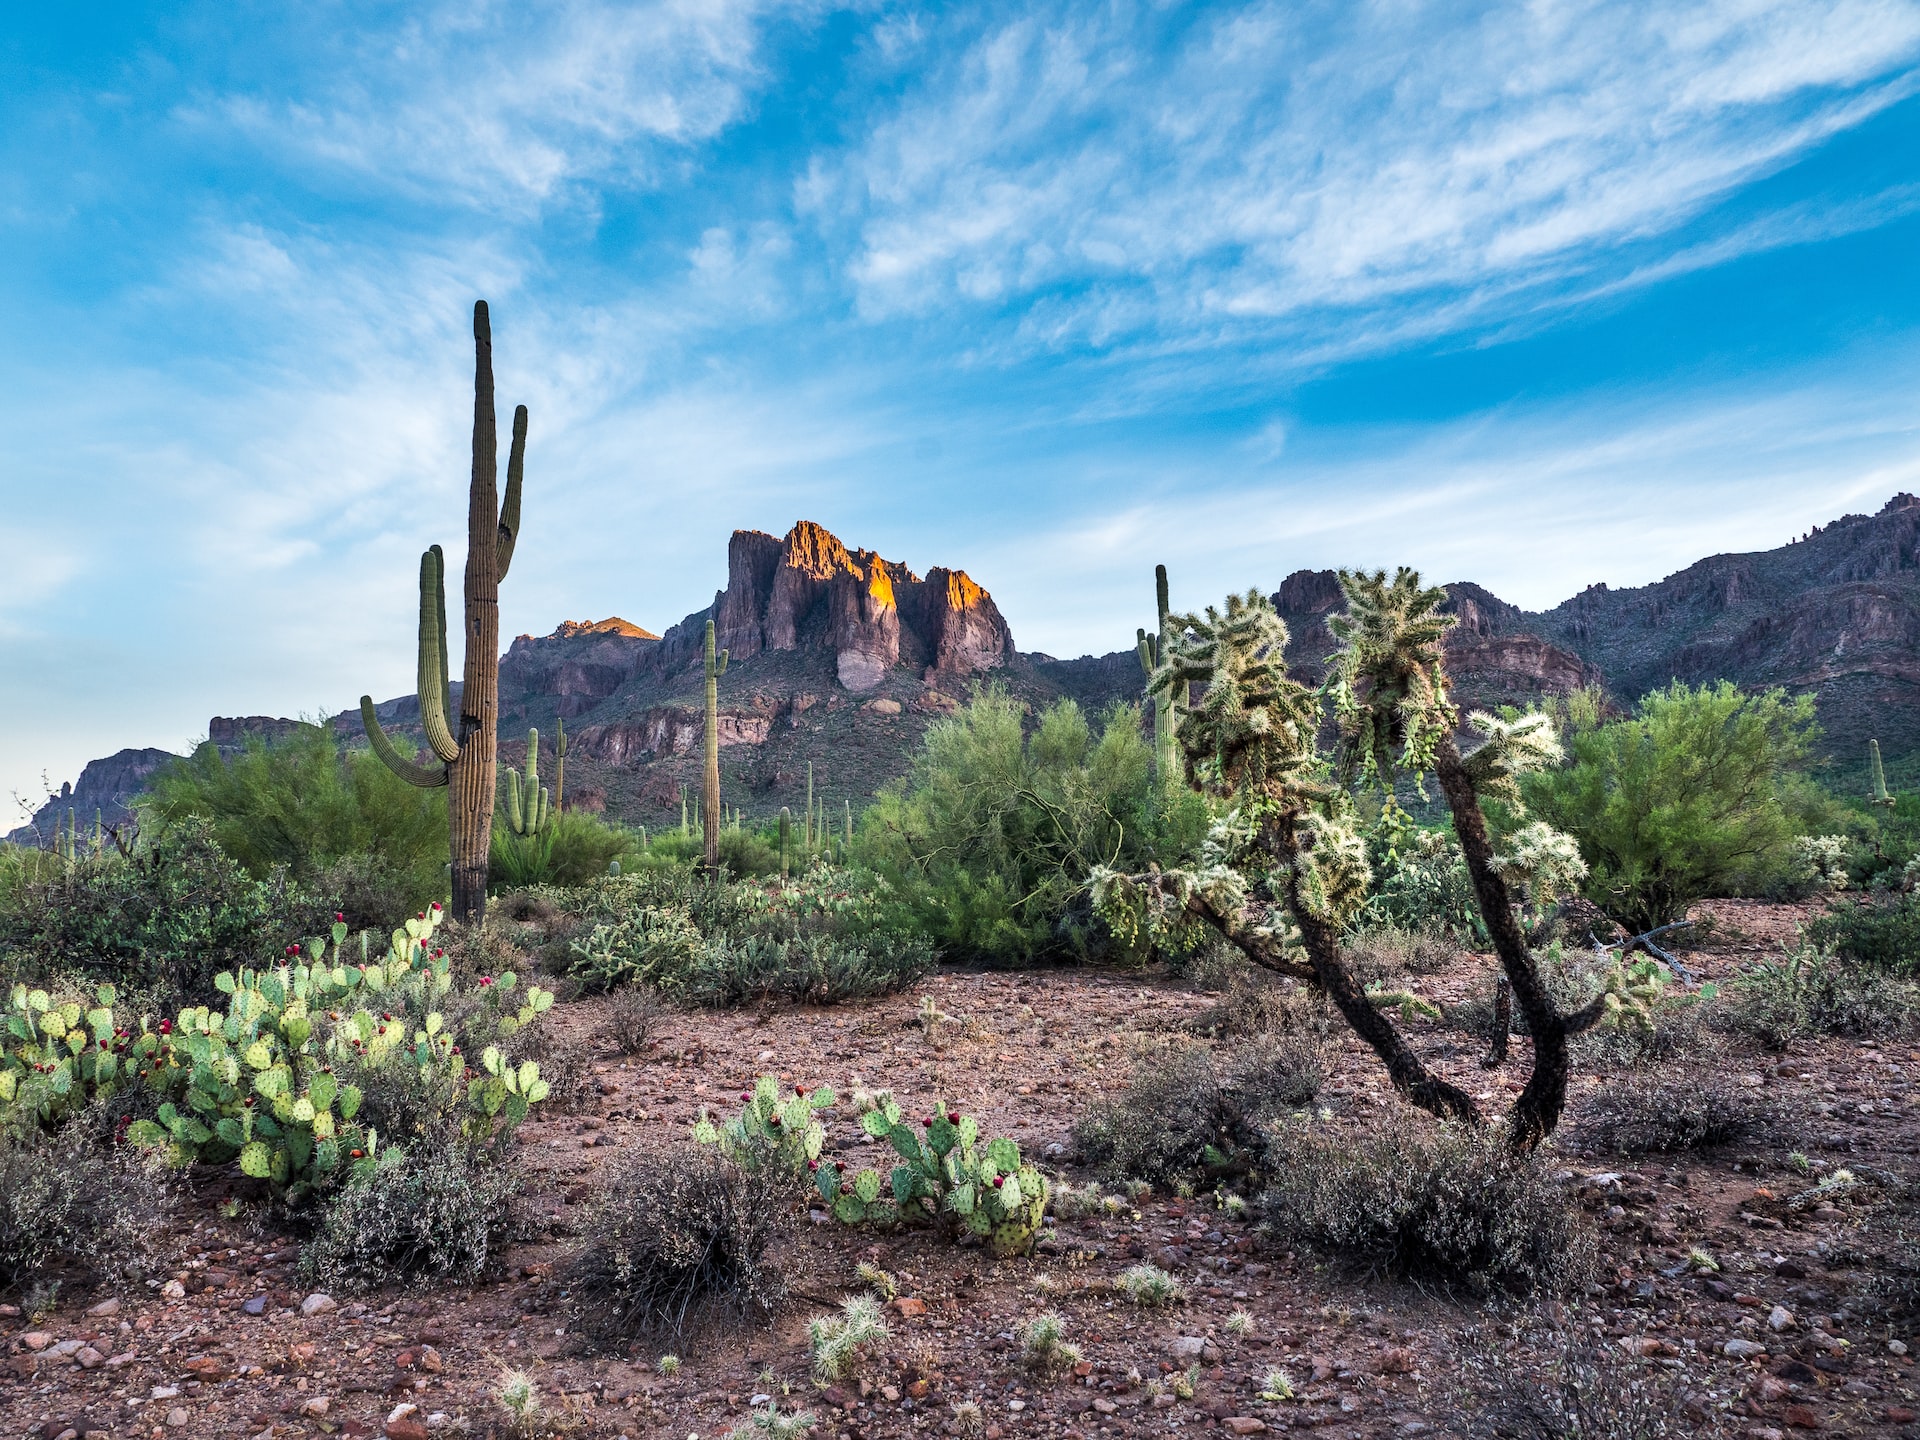 Scene of Sonoran Desert with saguaro cactus, with bright blue sky overhead.